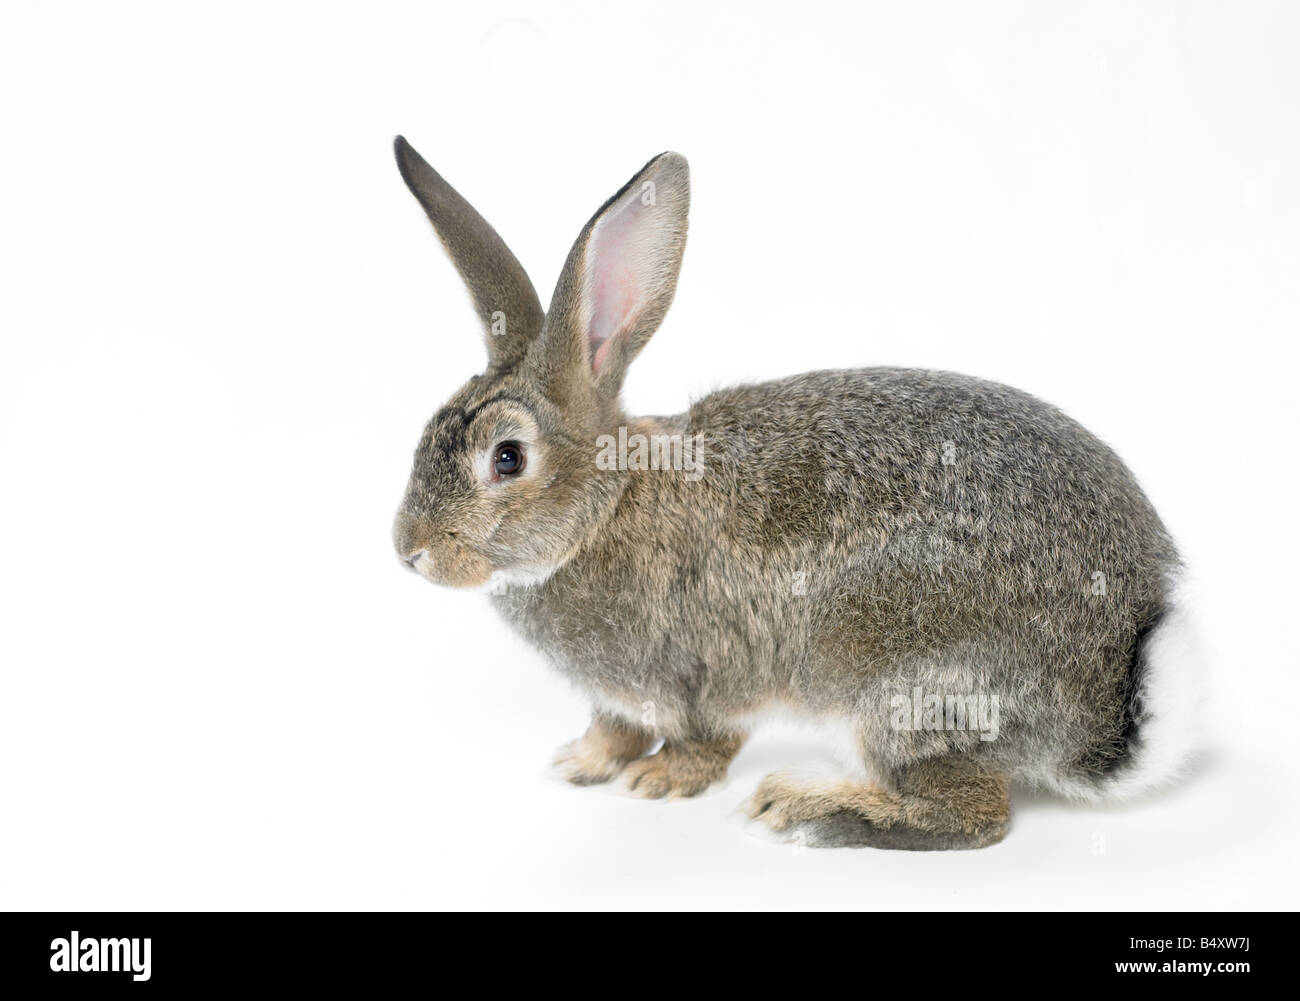 Wild,domestic rabbit on white background.Cutout. Stock Photo